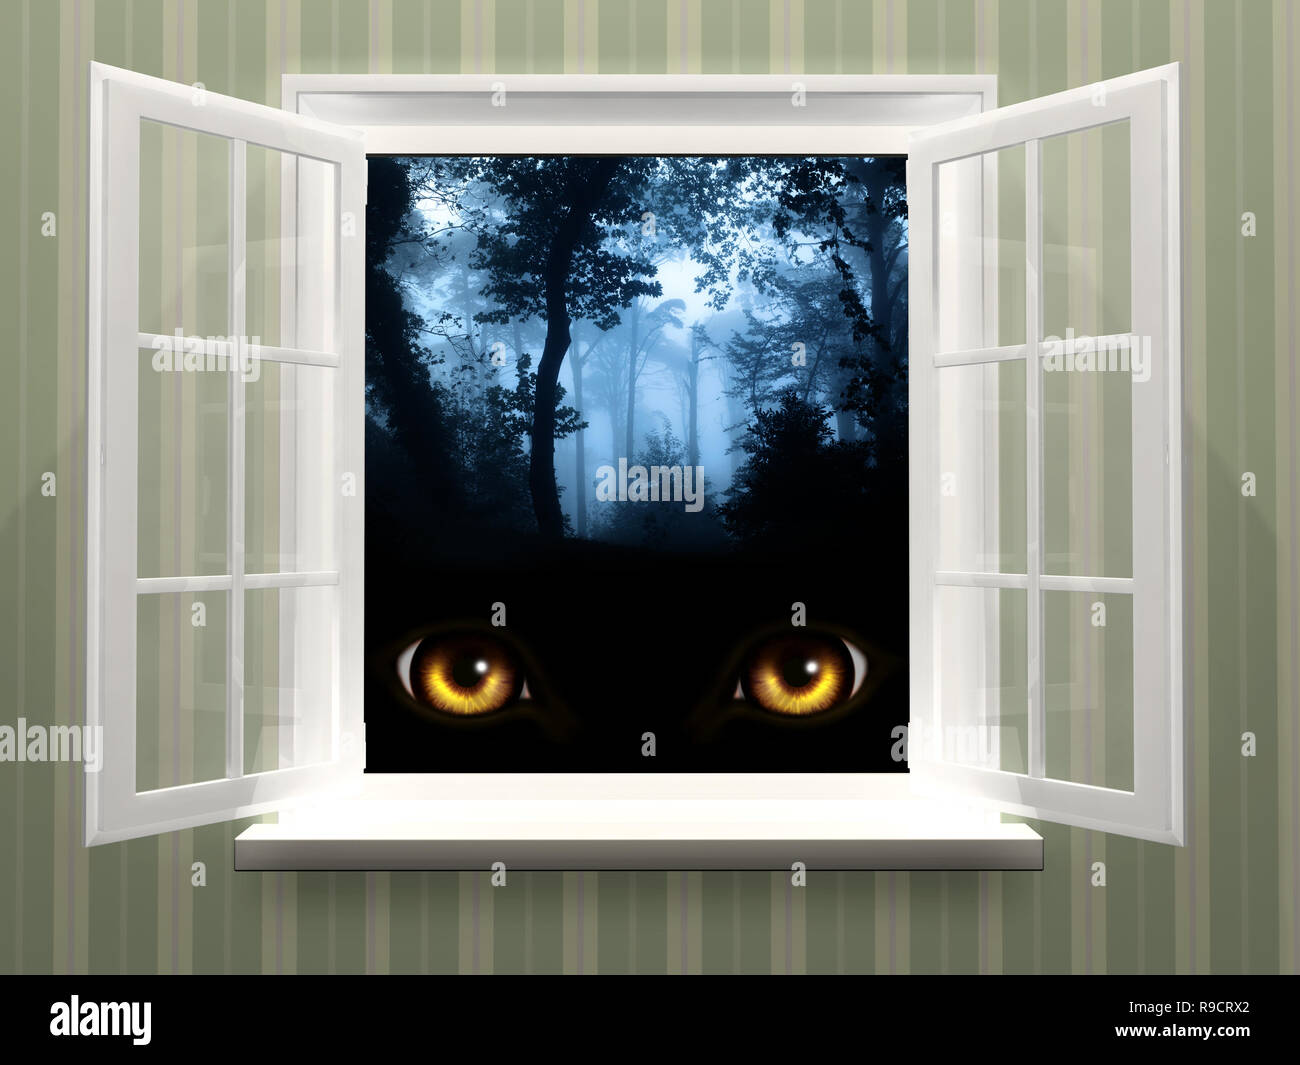 Eyes of monster in open window Stock Photo - Alamy